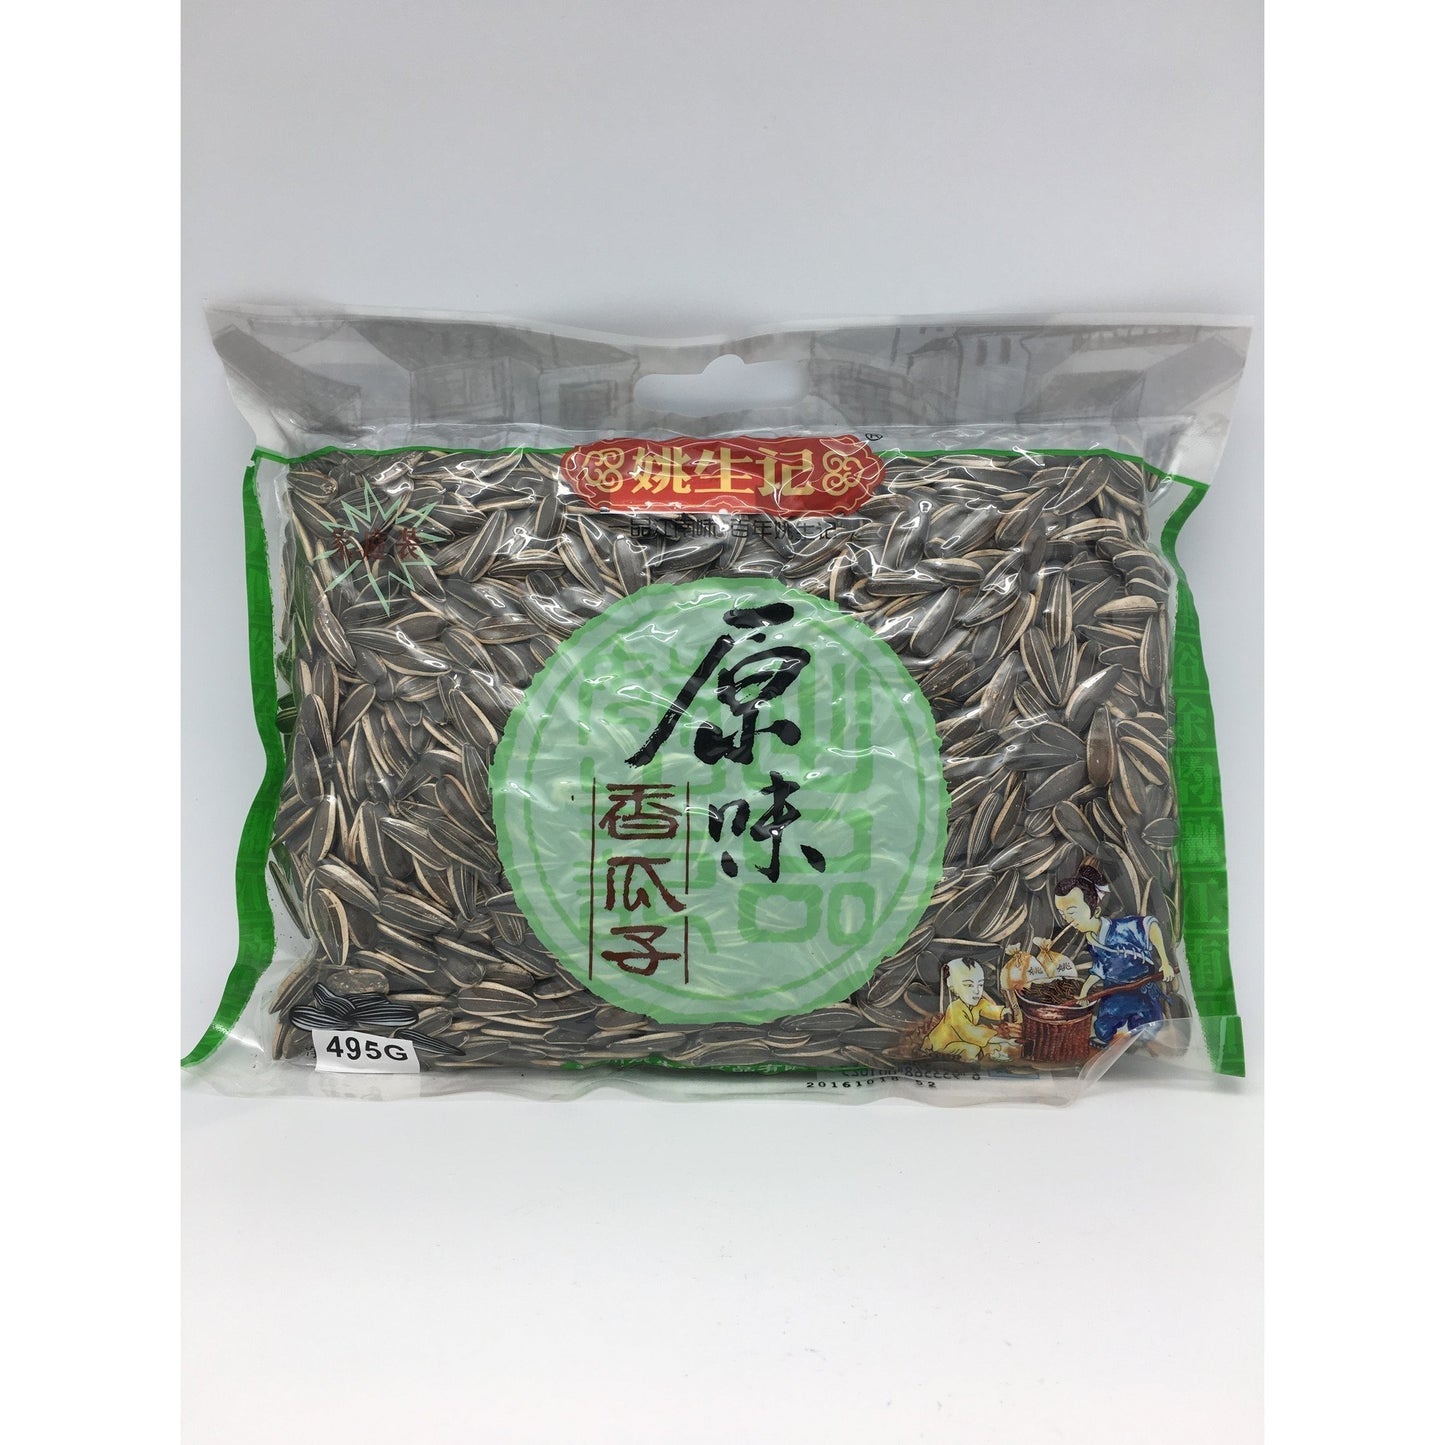 J053 Yao Sheng Ji brand- Roasted Sunflower Seeds 495g - 8 bags / 1 CTN - New Eastland Pty Ltd - Asian food wholesalers